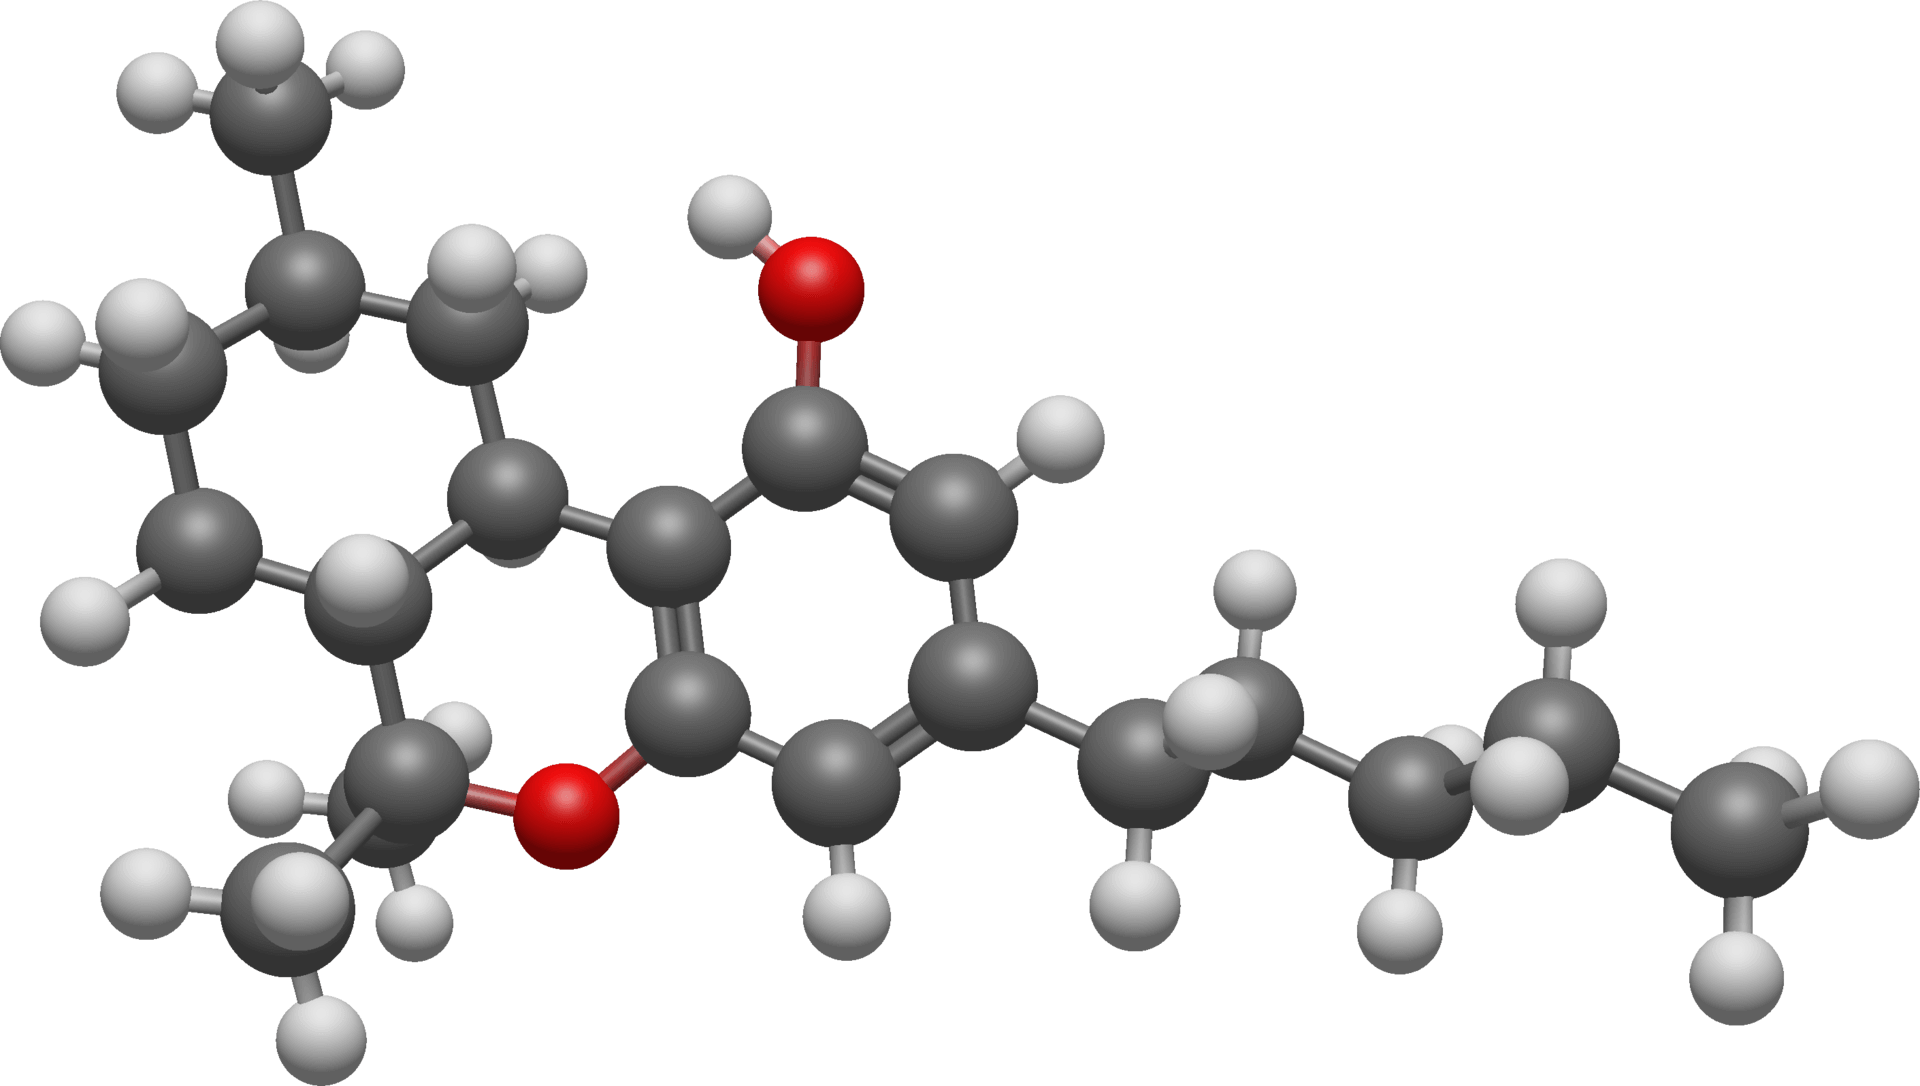 hcc-hexahidrocannabinol